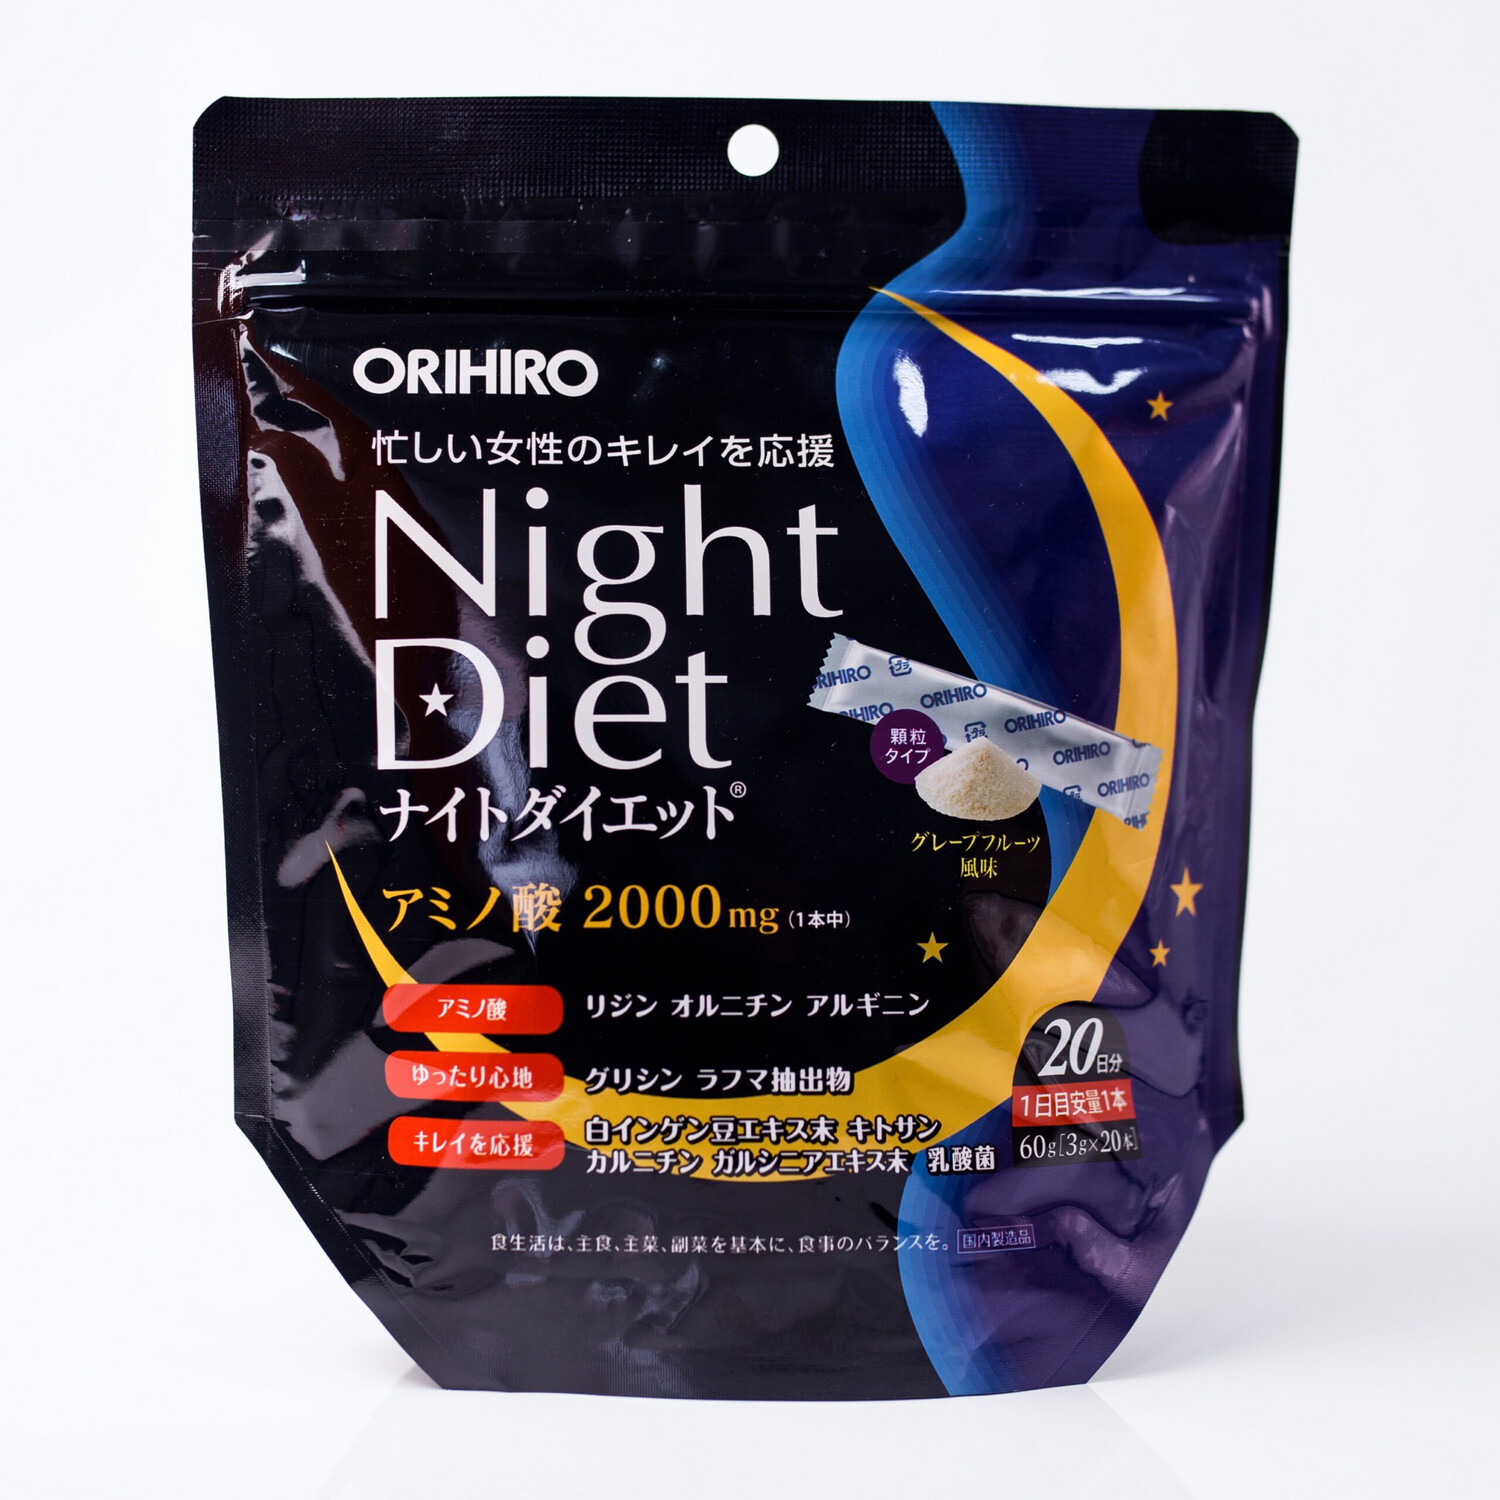 Orihiro Night Diet. Ночная диета 20 шт.